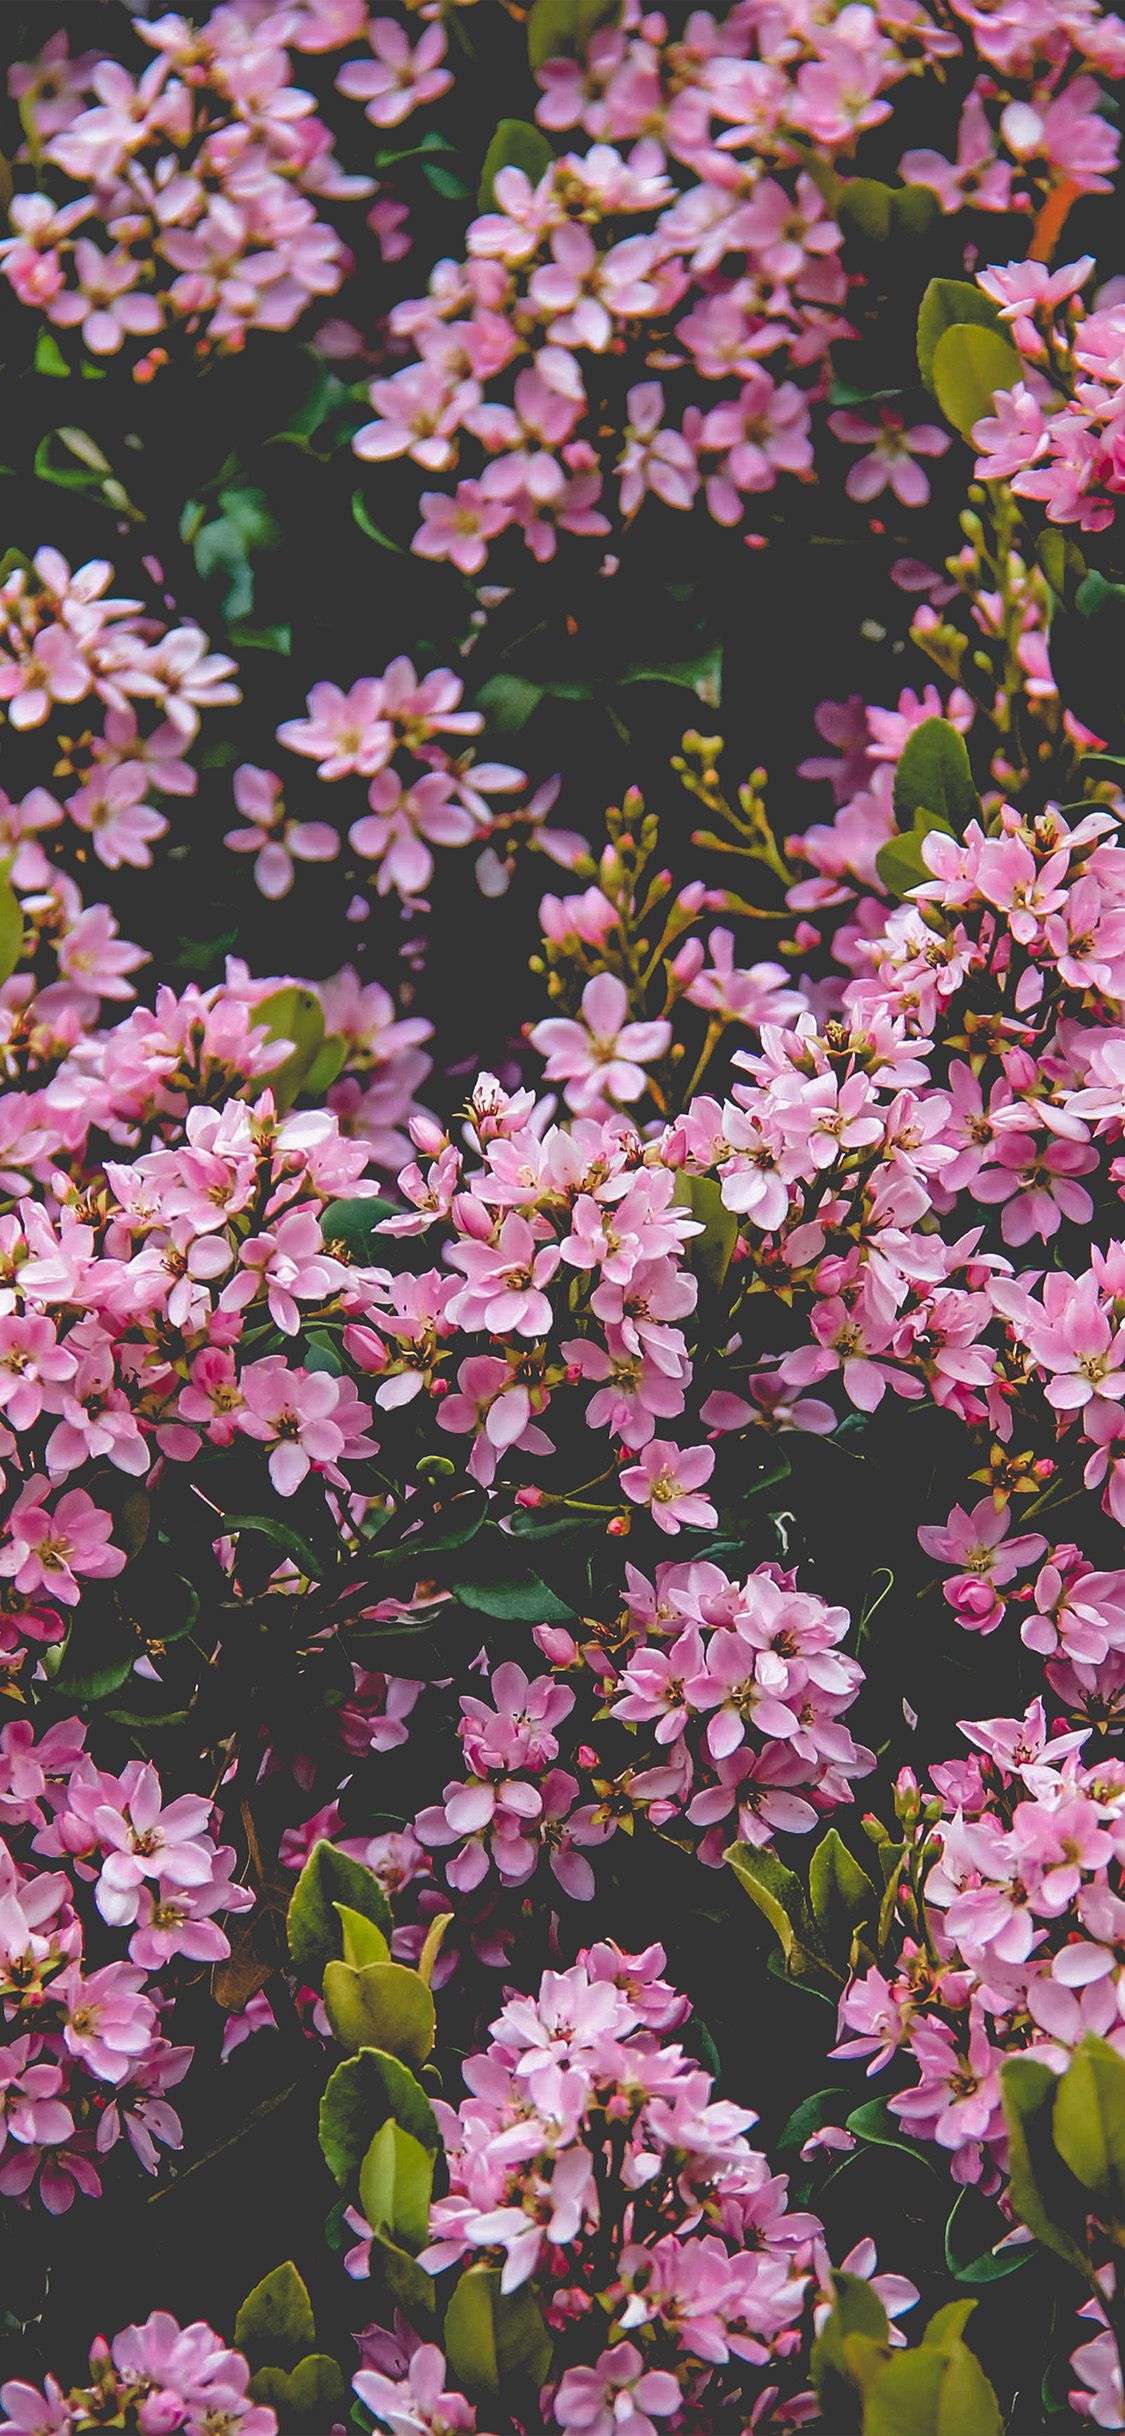 iPhone X wallpaper. flower pink spring